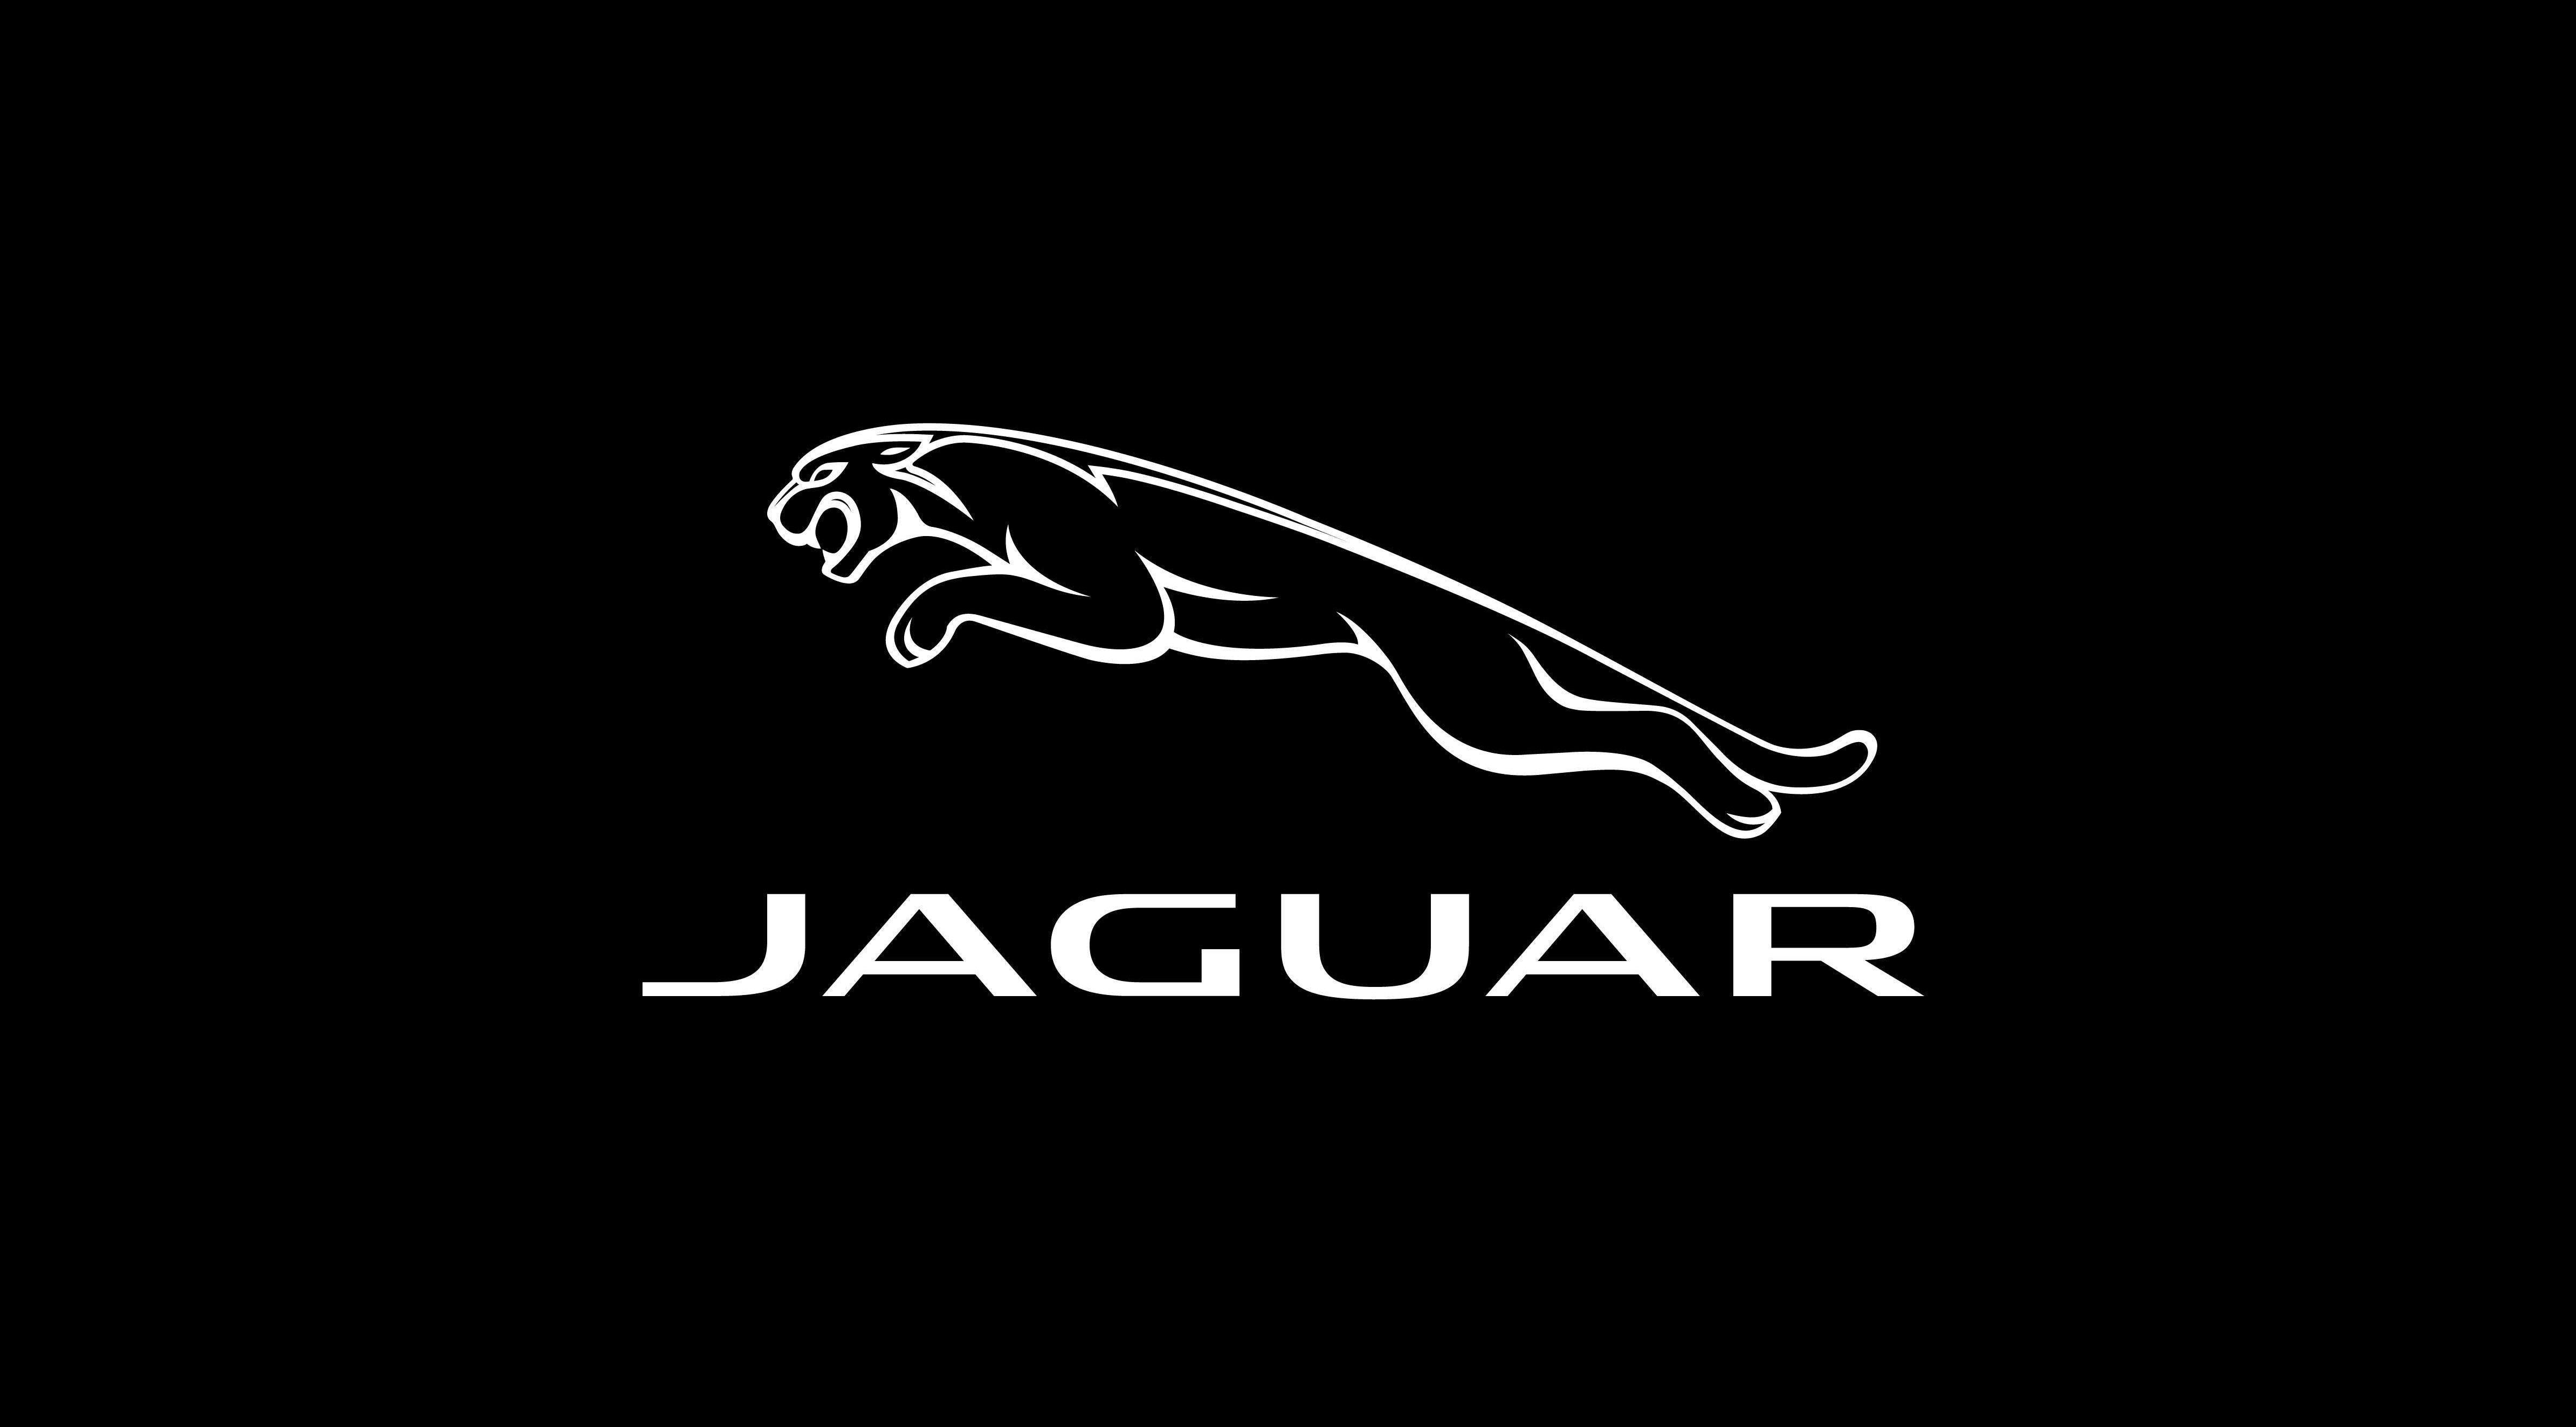 Jaguar Brand Cars Company Full HD Logo Wallpaper HD